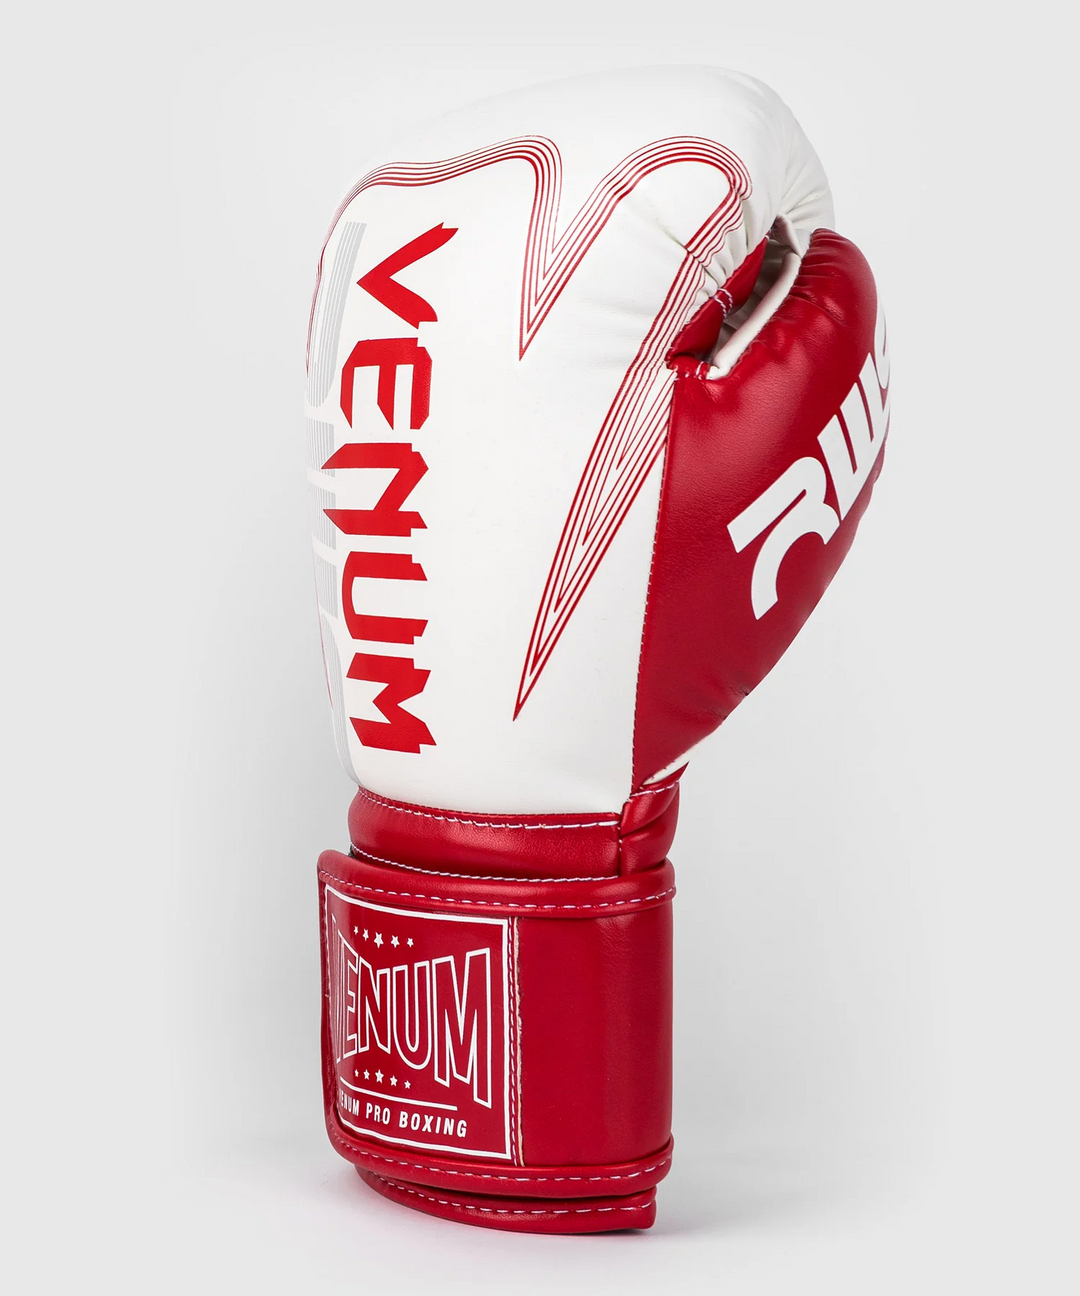 RWS x Venum Boxing Gloves